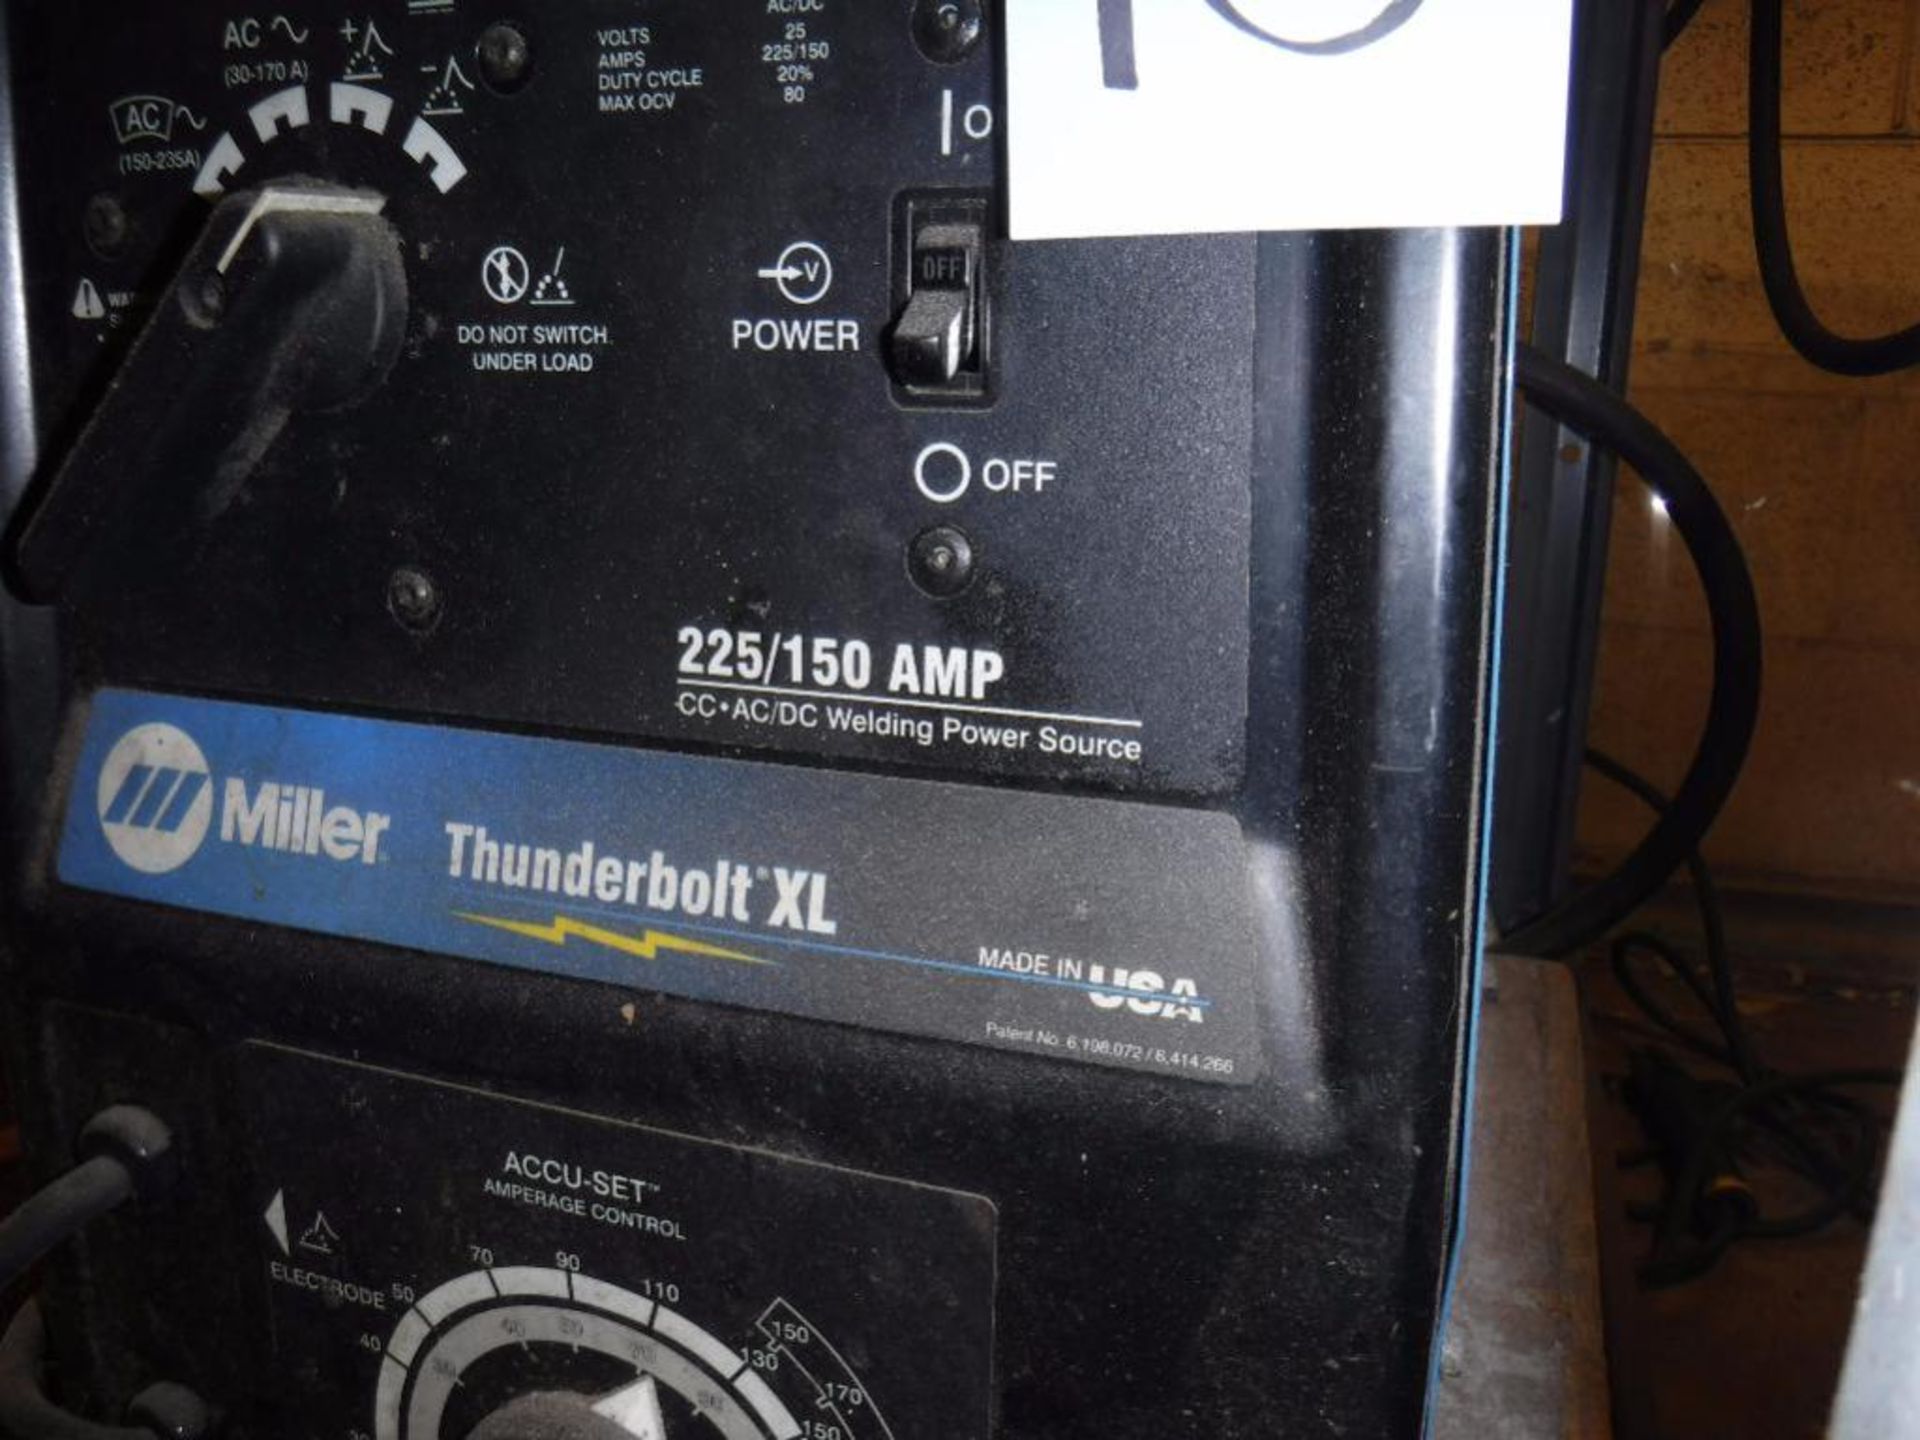 Miller Thunderbolt XL 225/150 amp Welding Power Source - Image 2 of 4